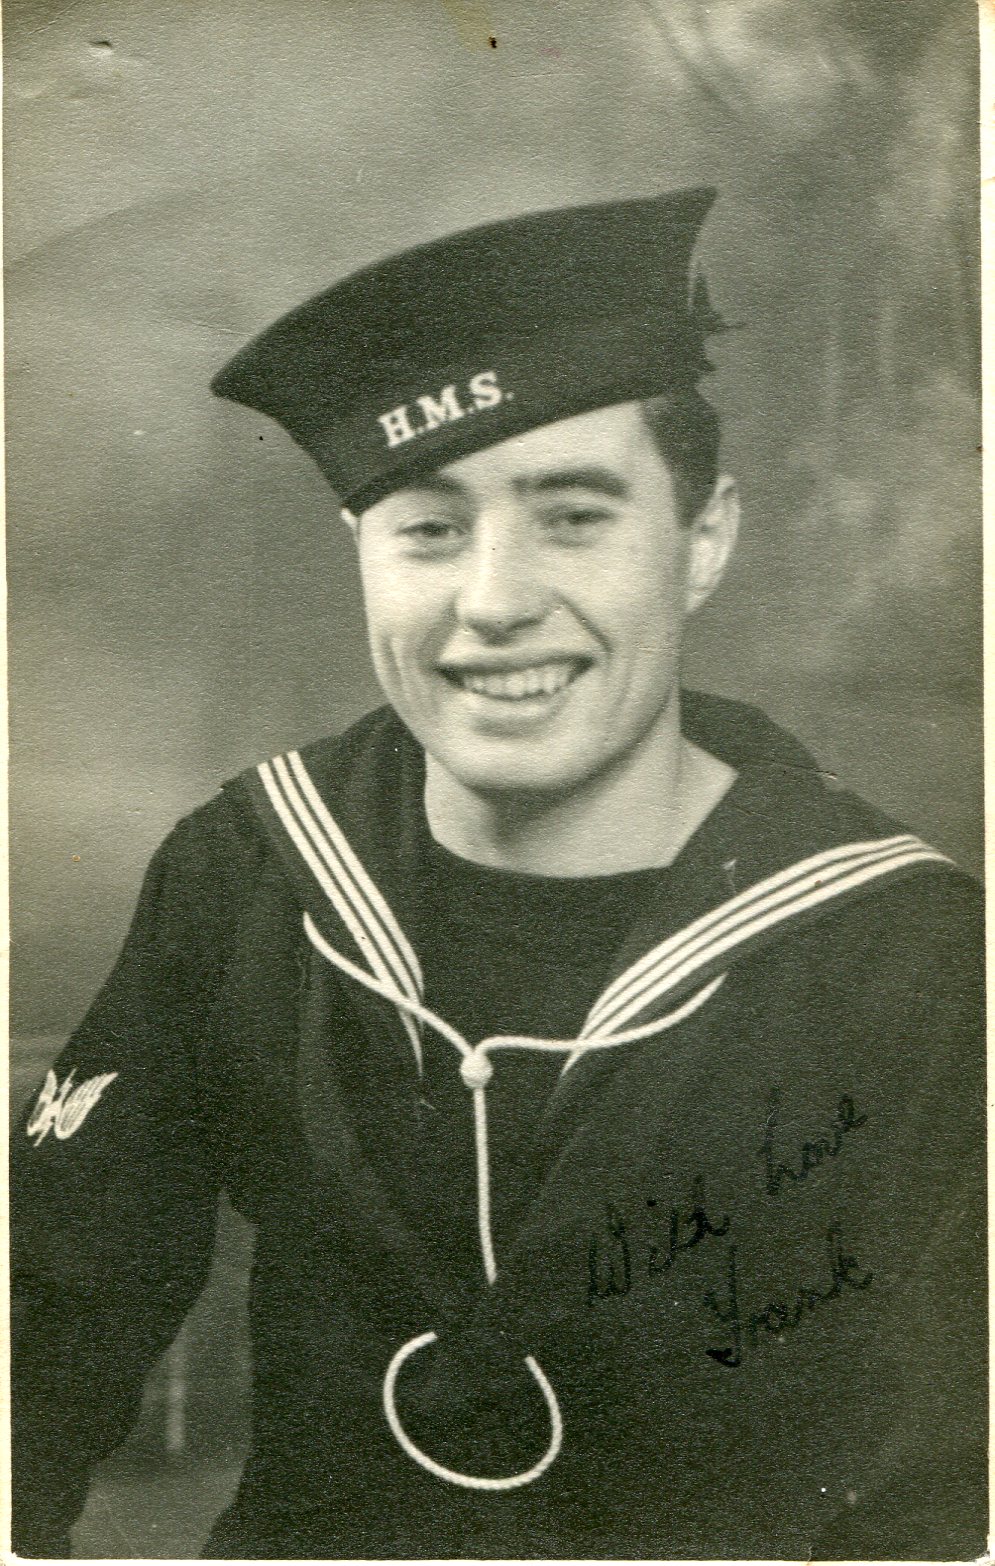 Frank in Navy uniform